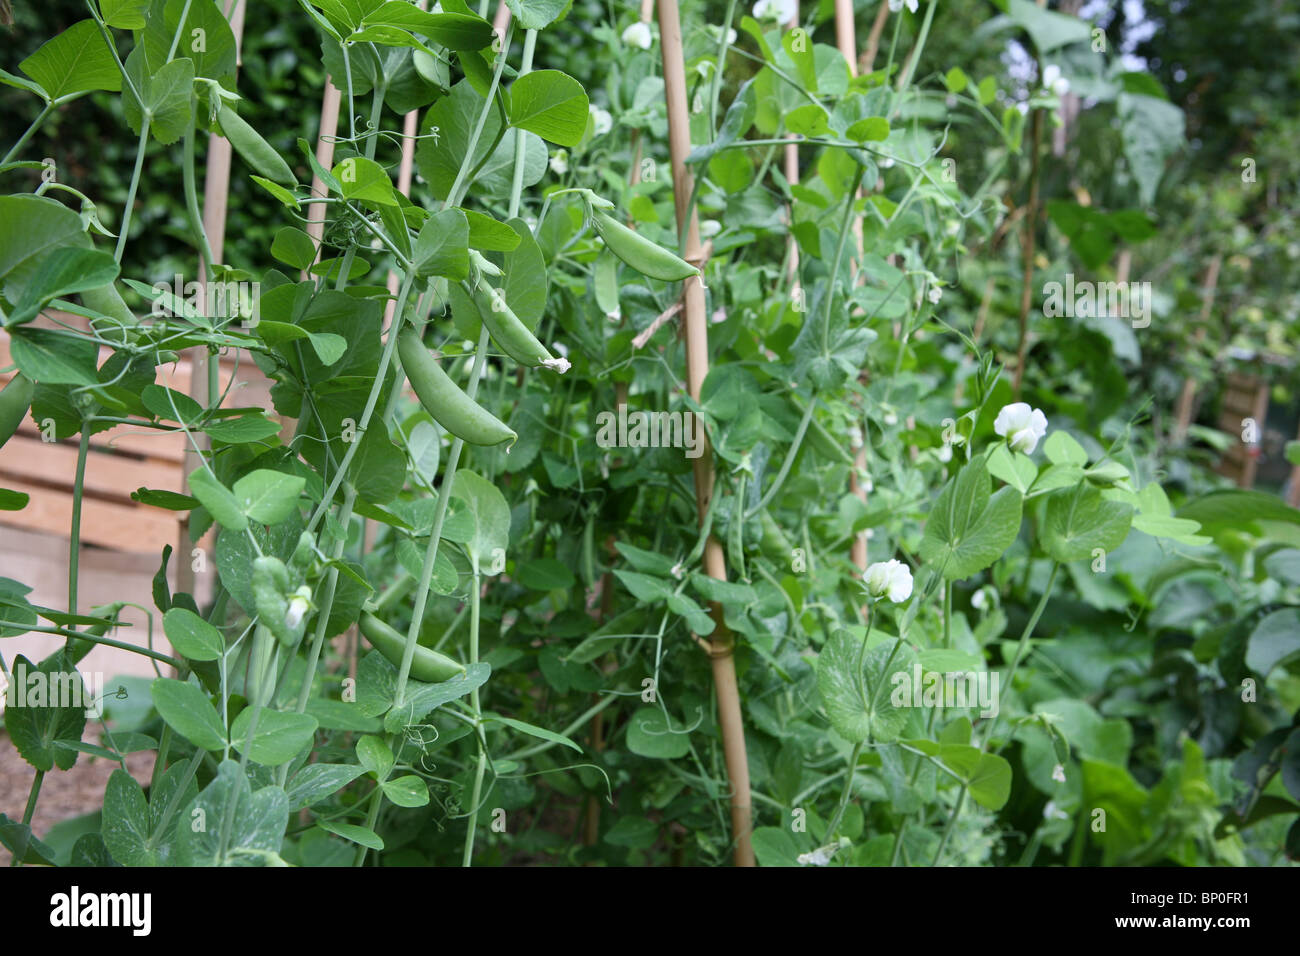 (Pisum sativum var. Saccharatum) tout di mange / piselli da neve e snap di zucchero / piselli da pisello (Pisum sativum var. macrocarpon) cresce all'aperto in un giardino Foto Stock